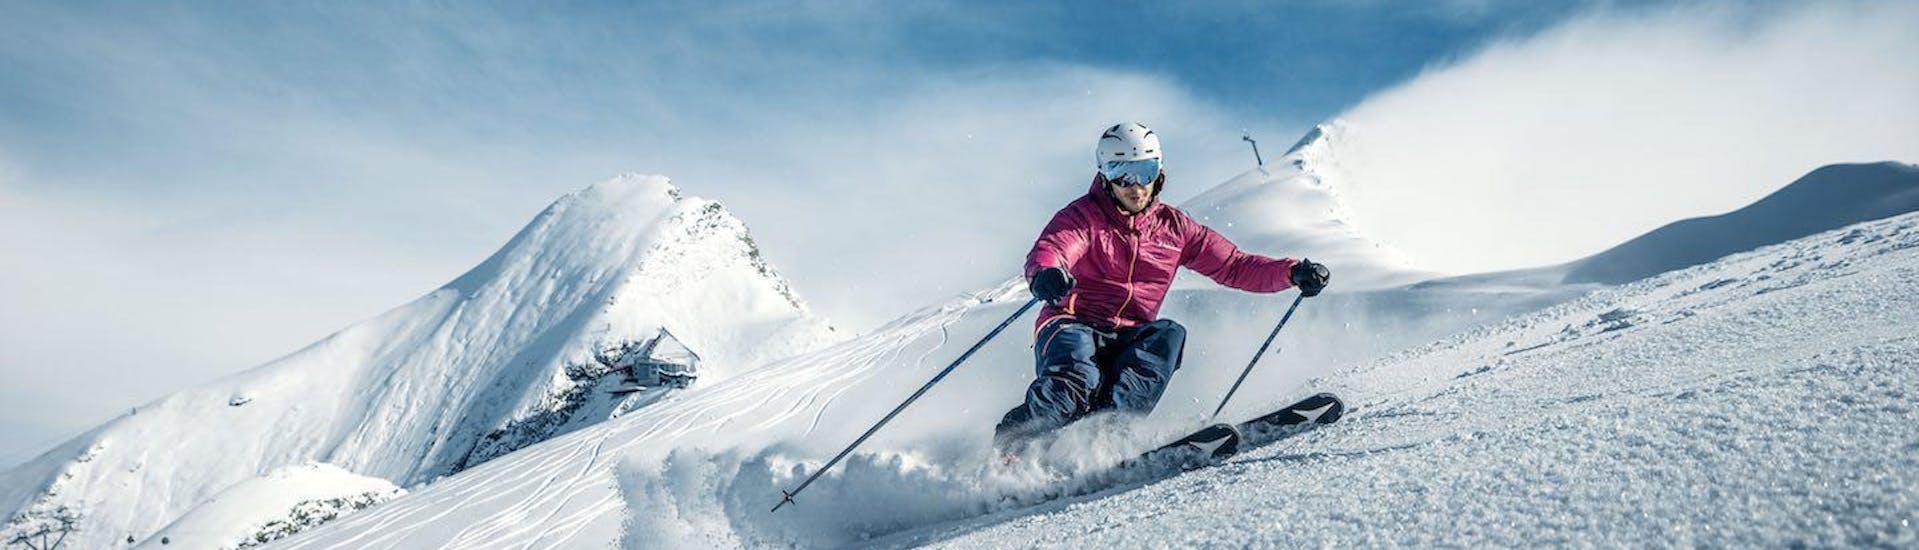 Lezioni di sci per adulti per avanzati.